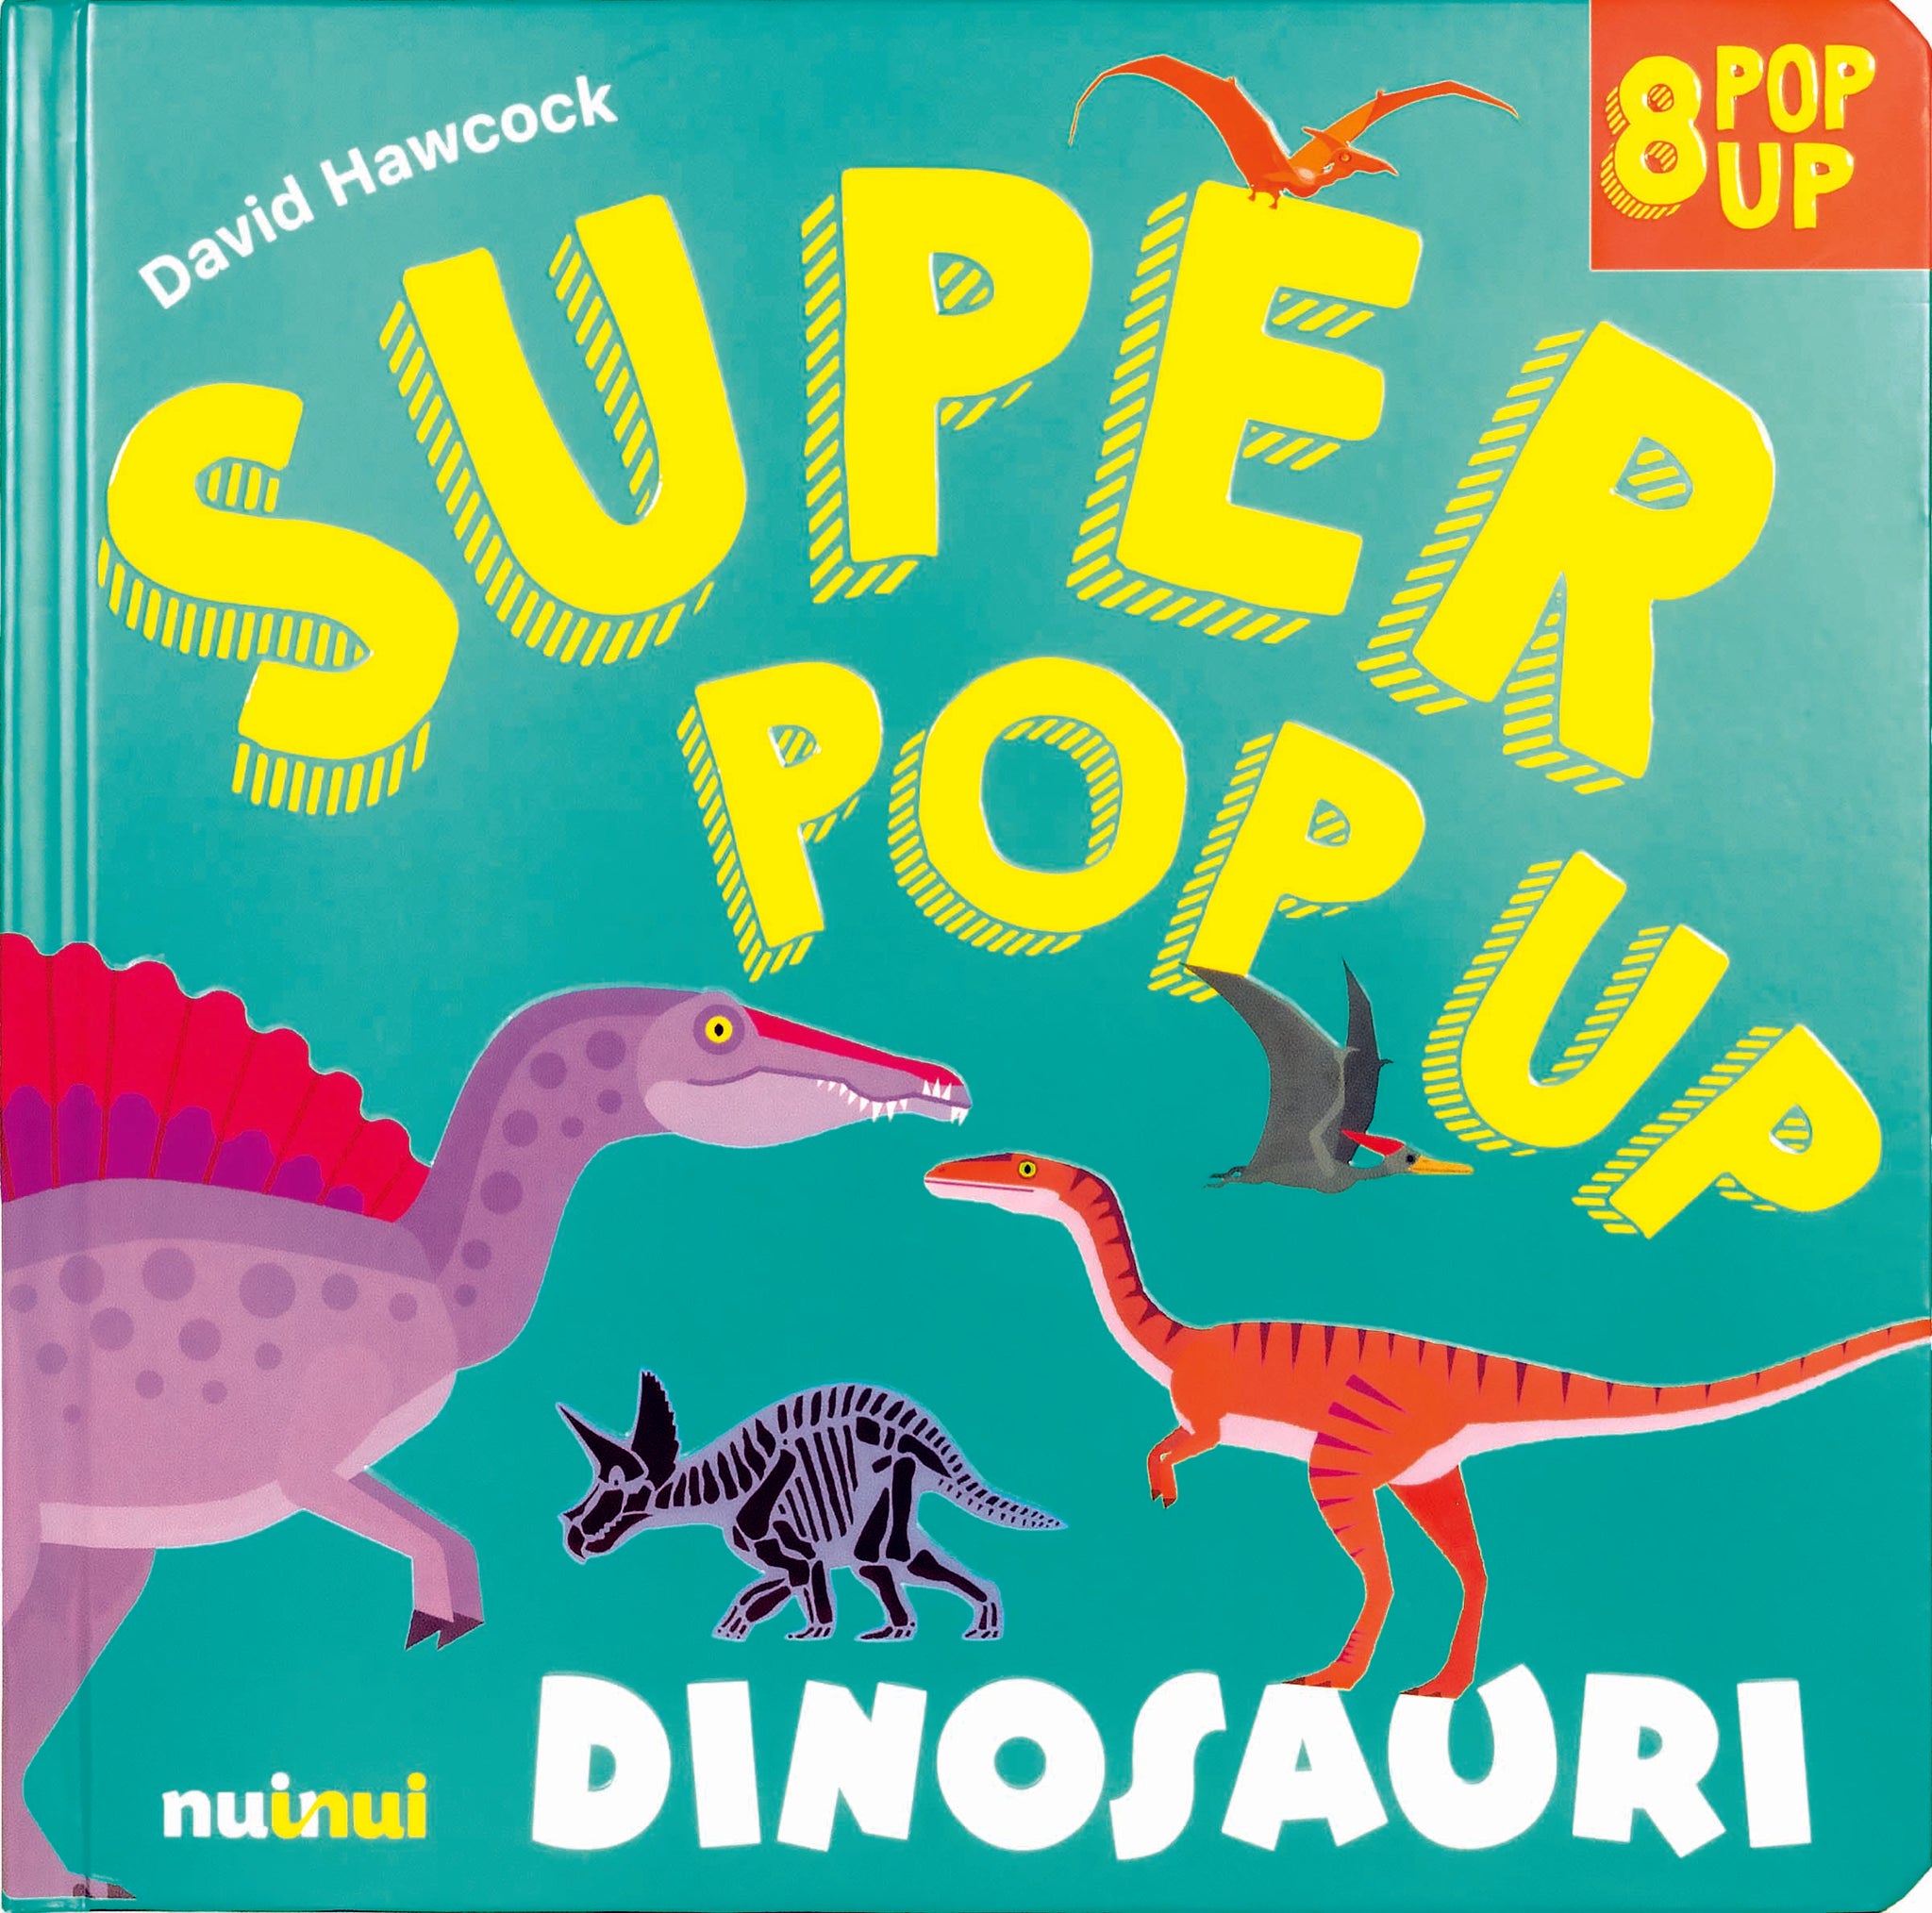 Super pop up - Dinosaurs